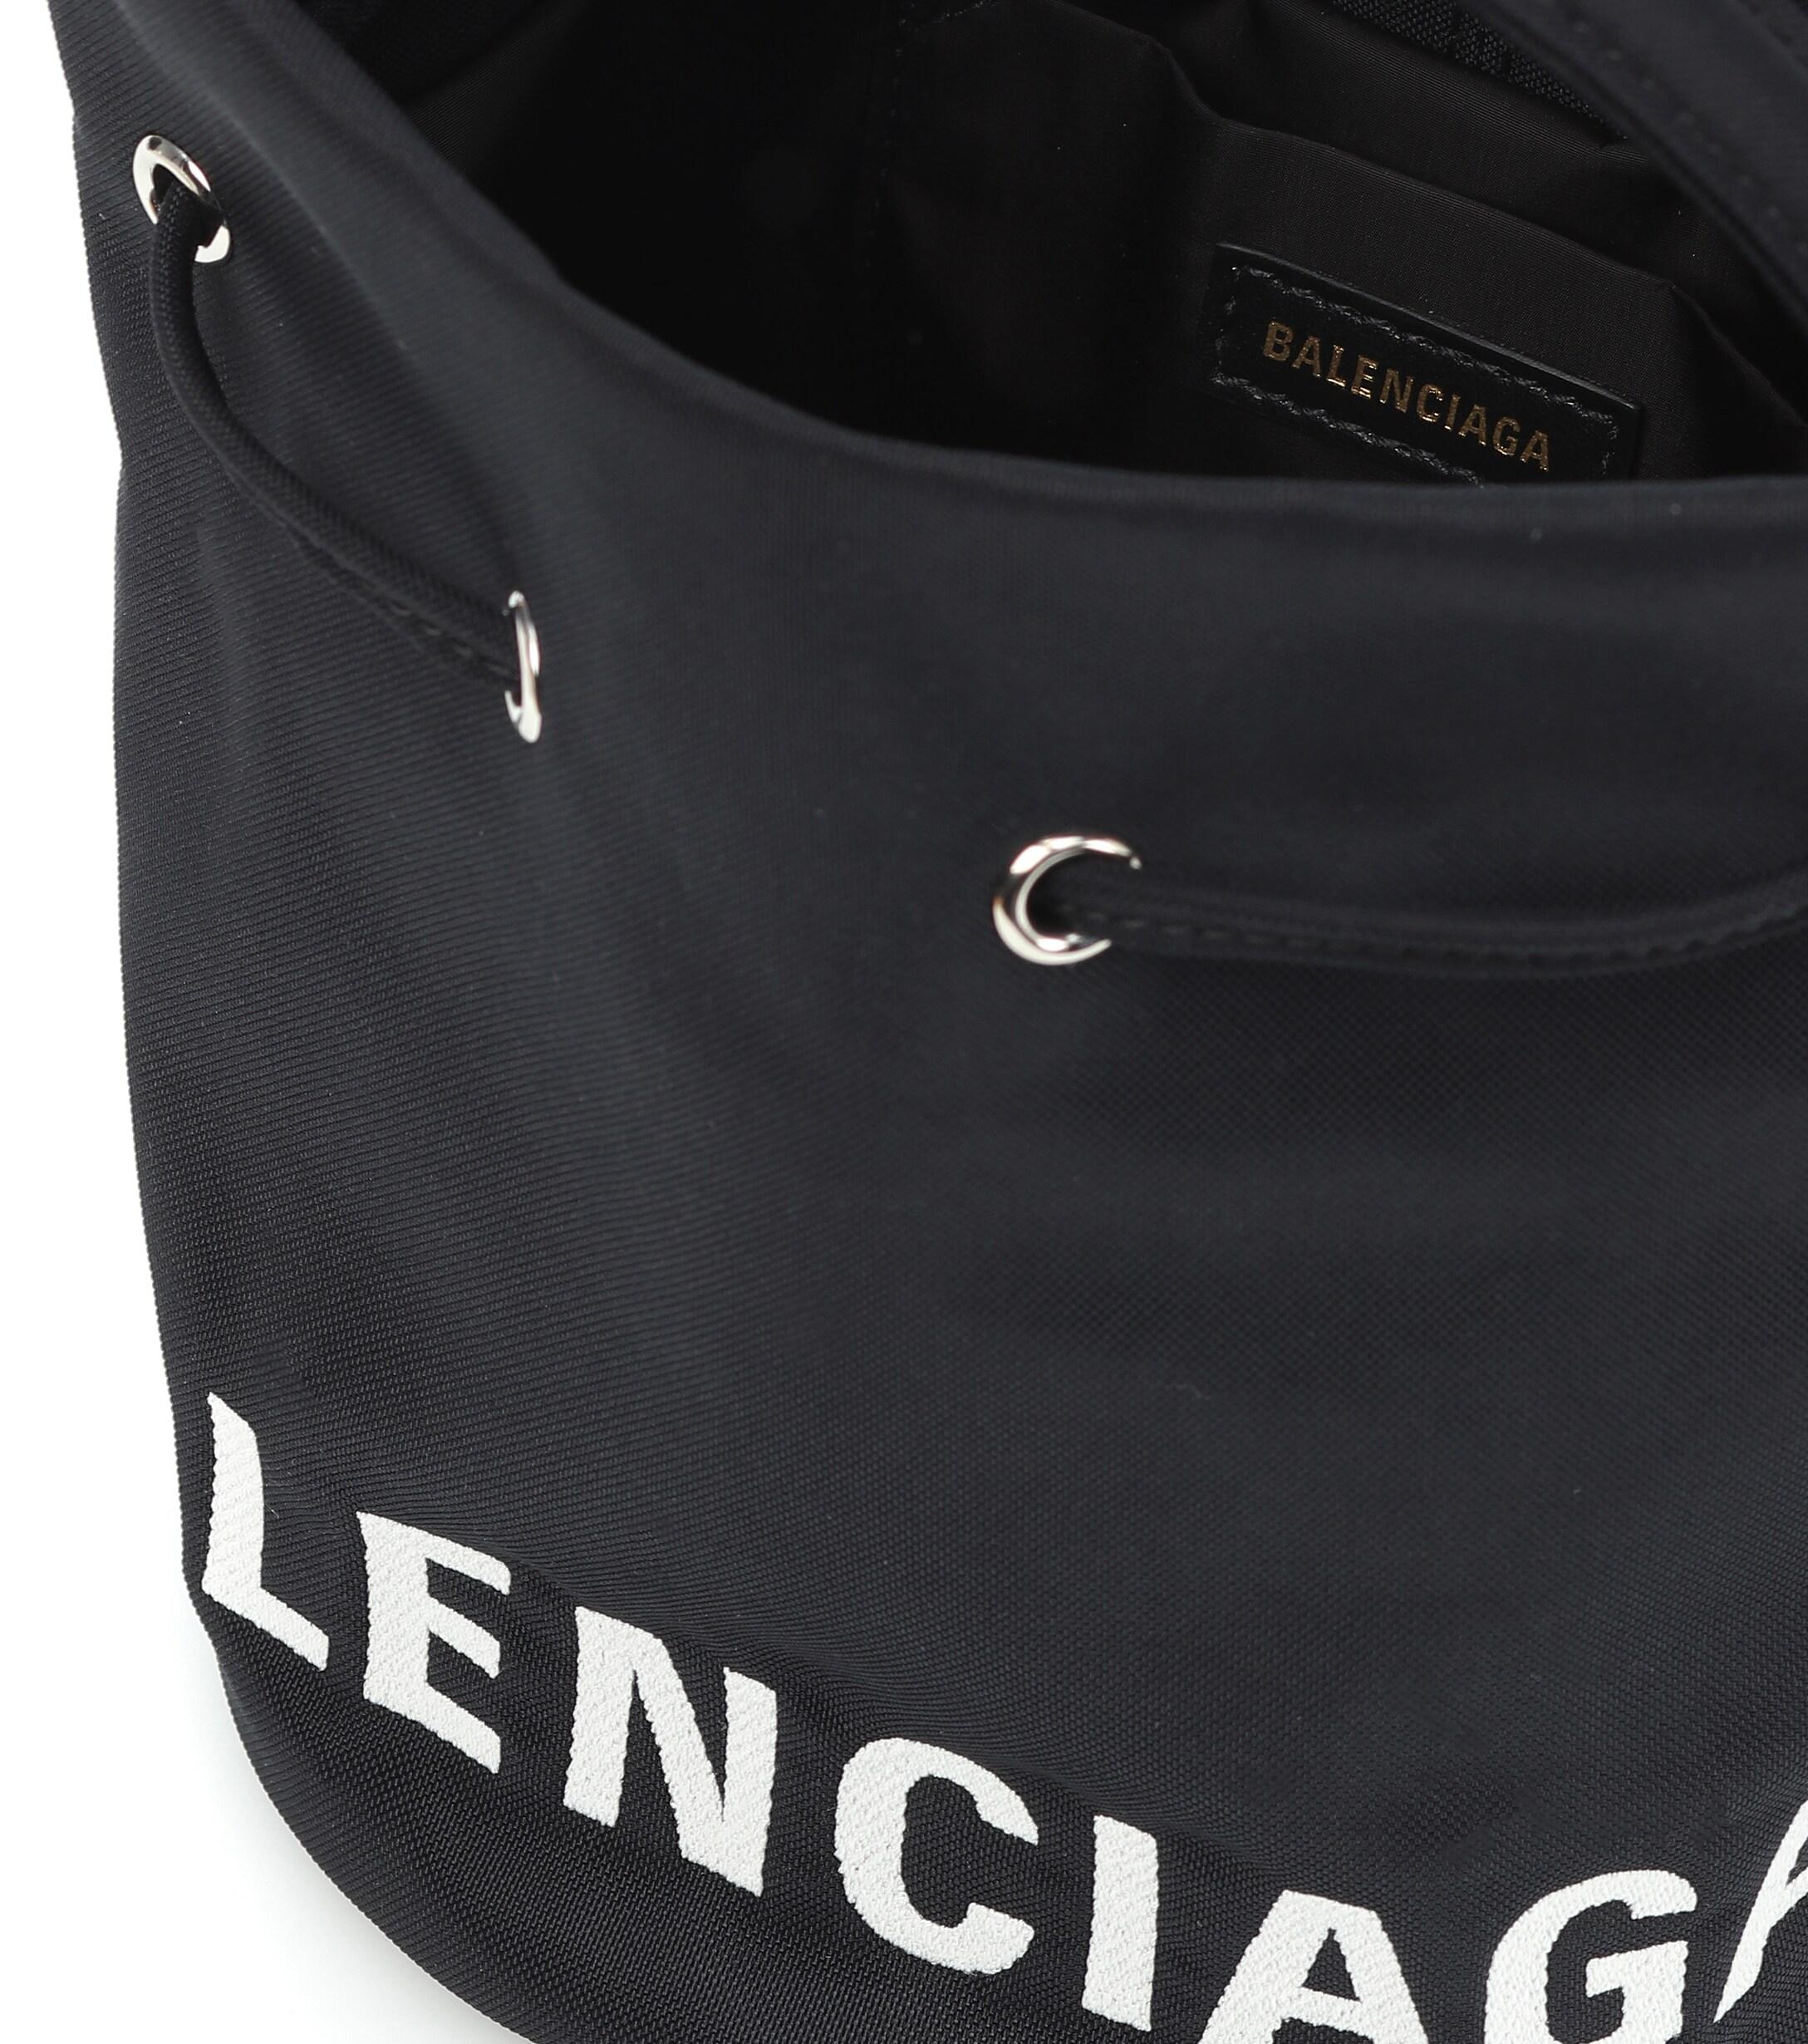 Balenciaga Wheel Xs Canvas Bucket Bag in Black - Lyst